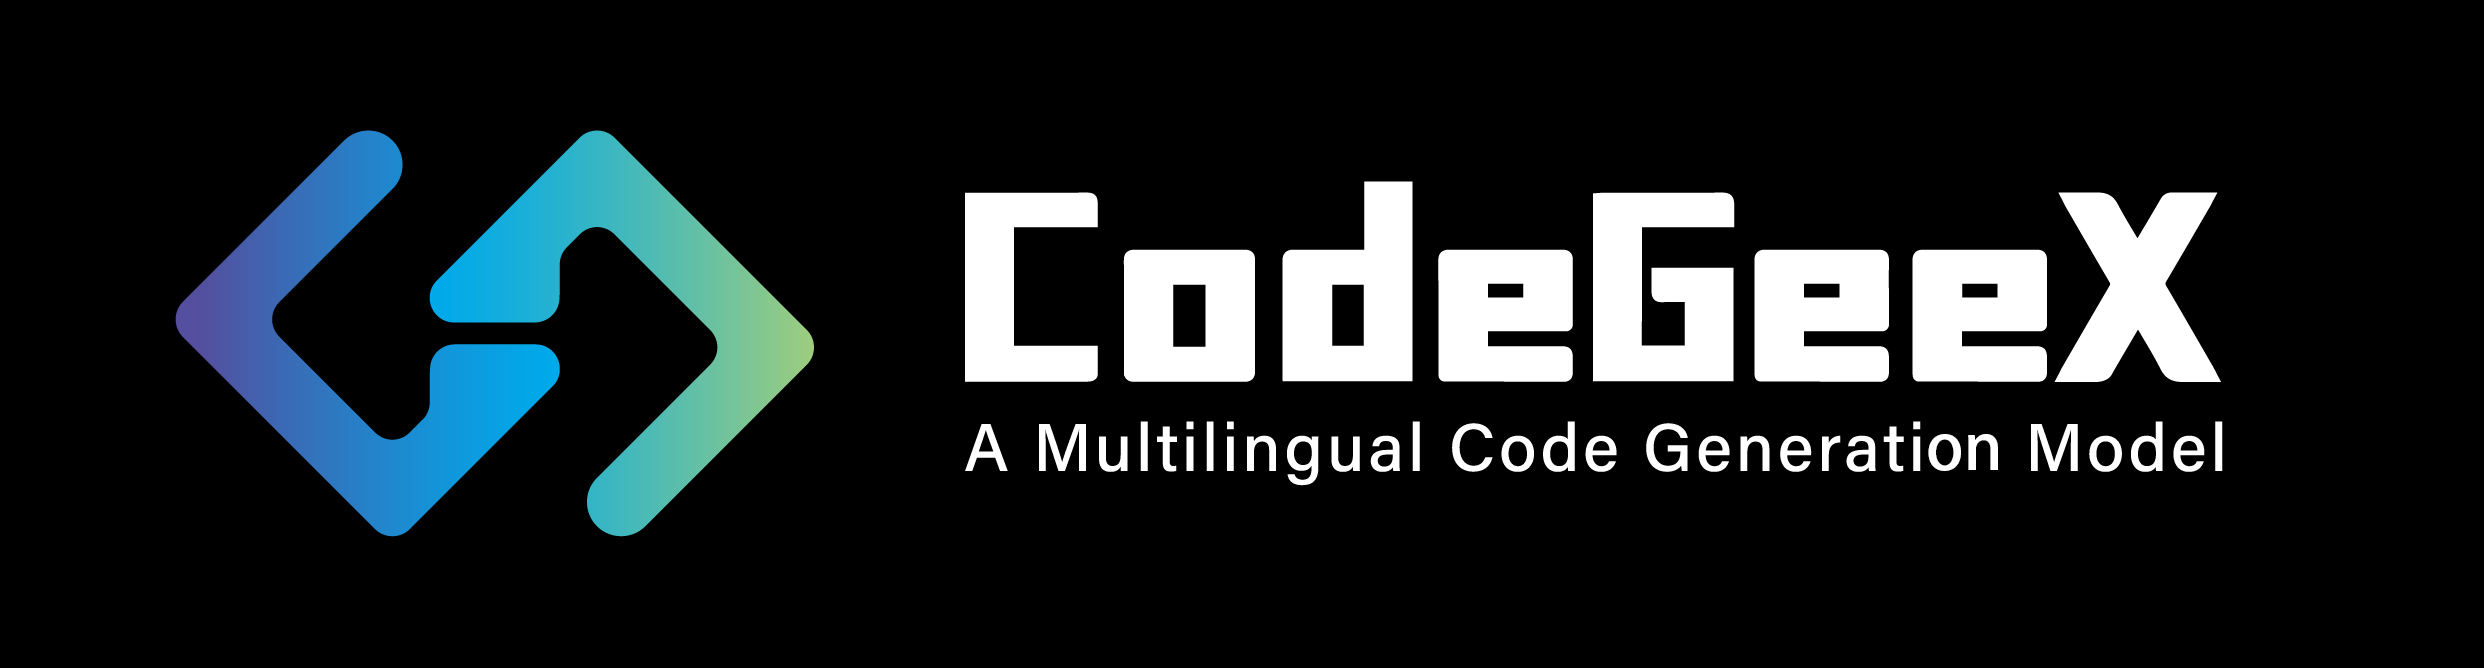 codegeex_logo